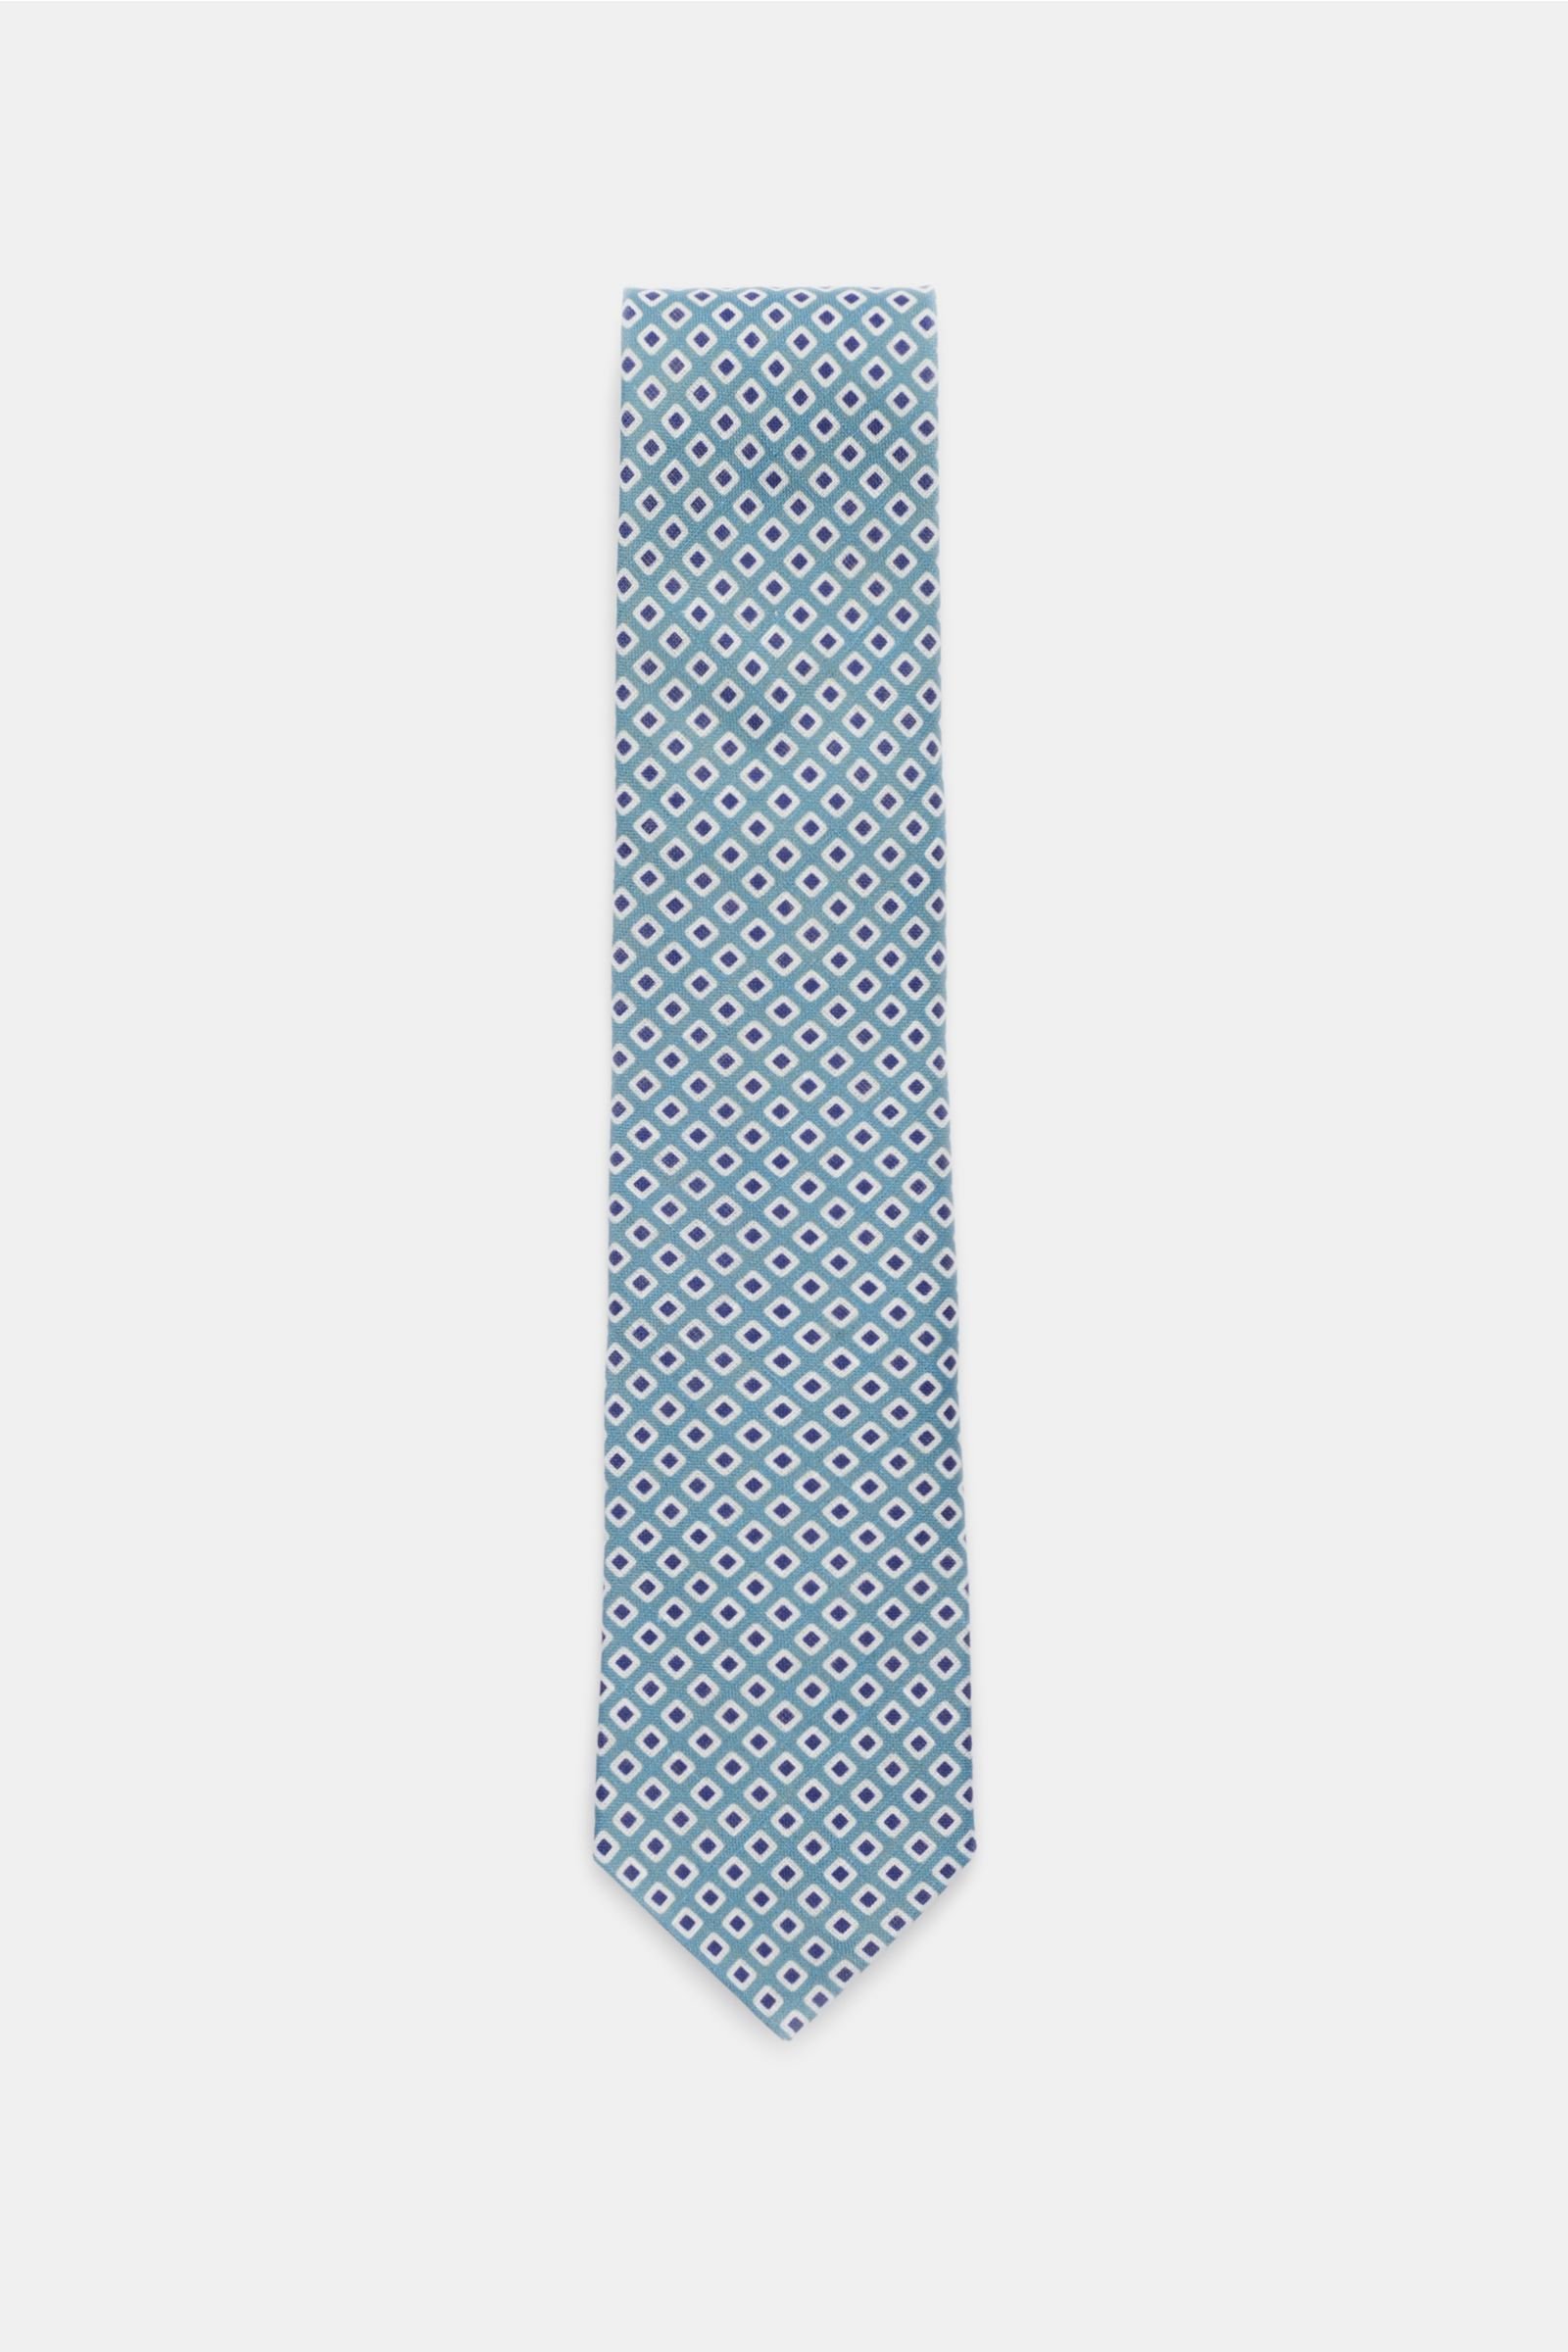 Linen tie grey-green/navy patterned